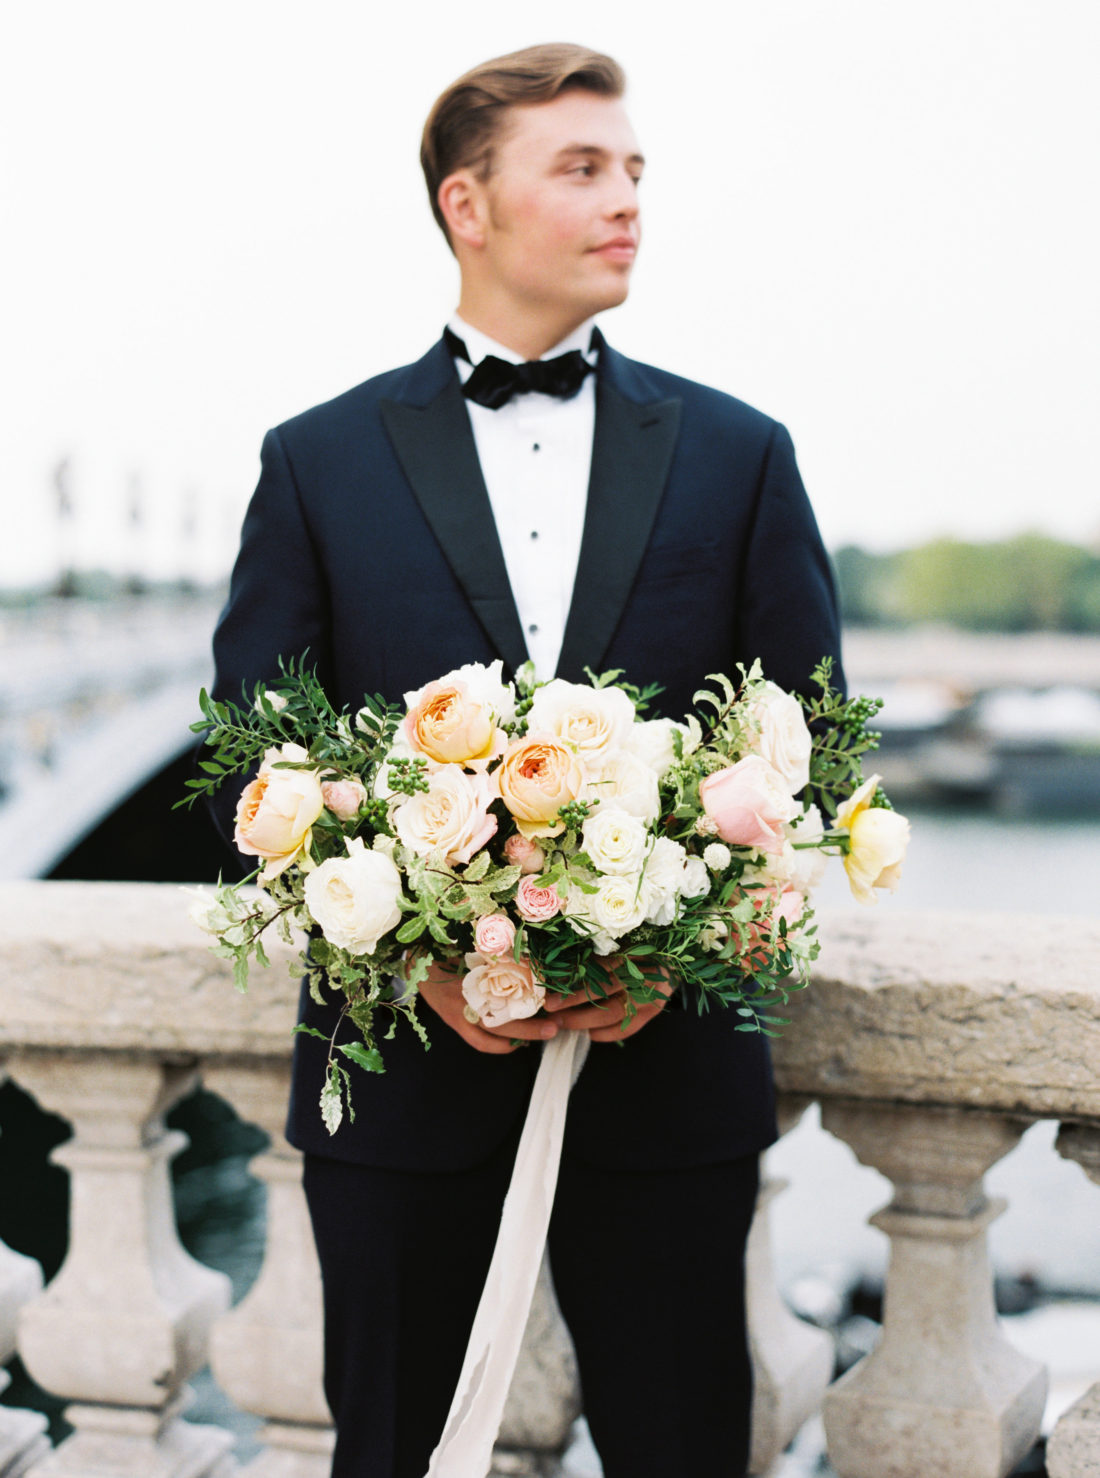 paris wedding planner rachael ellen events tips post photo 21